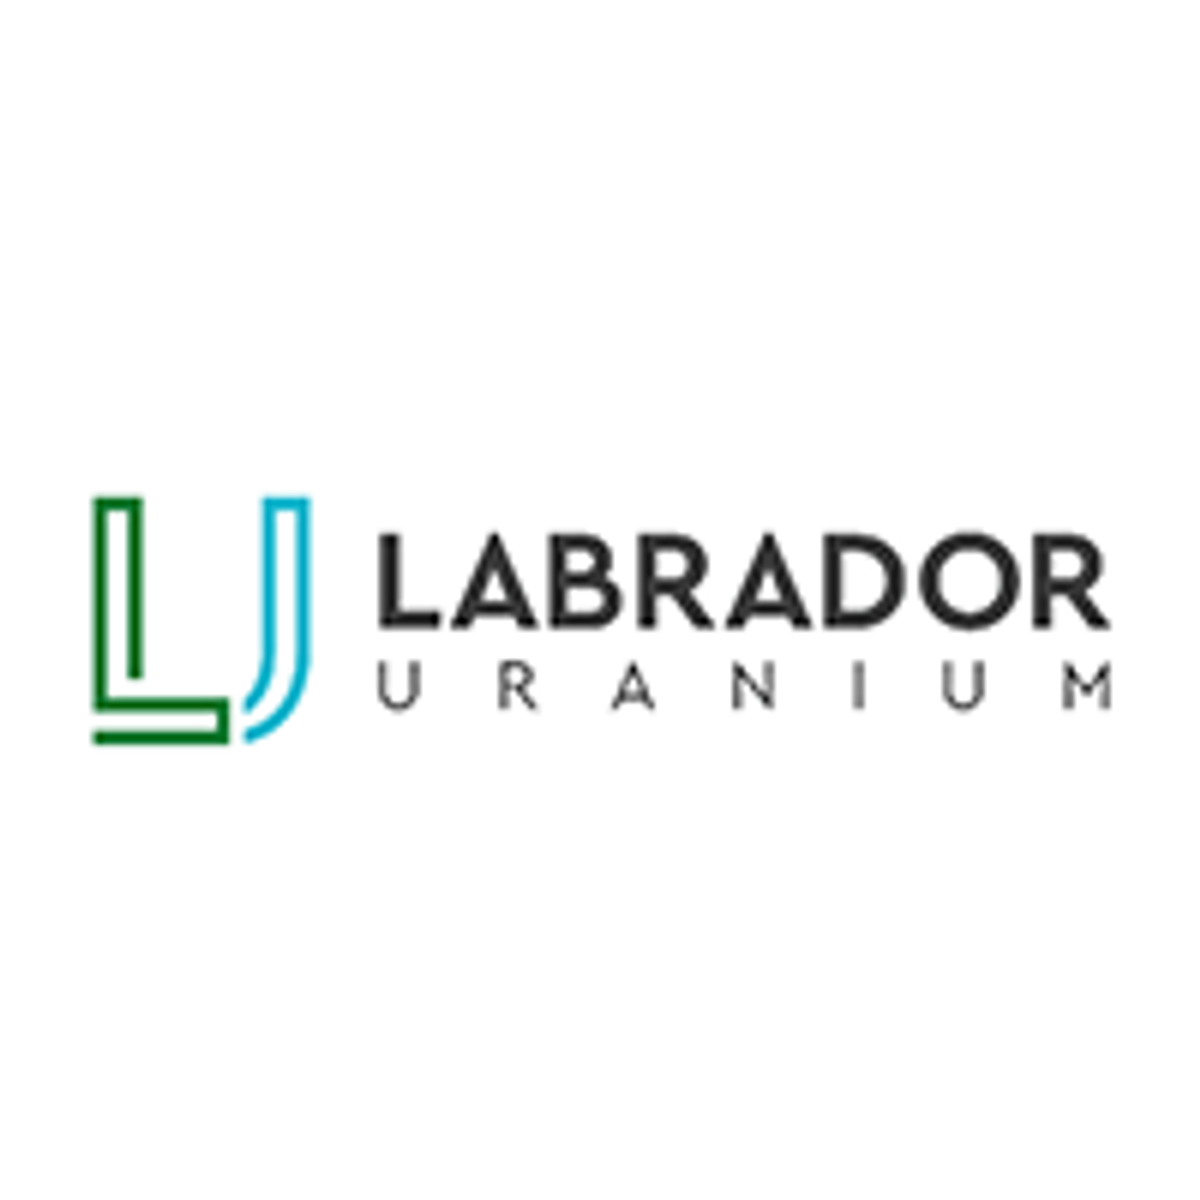 Labrador Uranium Completes 2022 Field Season - Setting Itself up for Future Growth